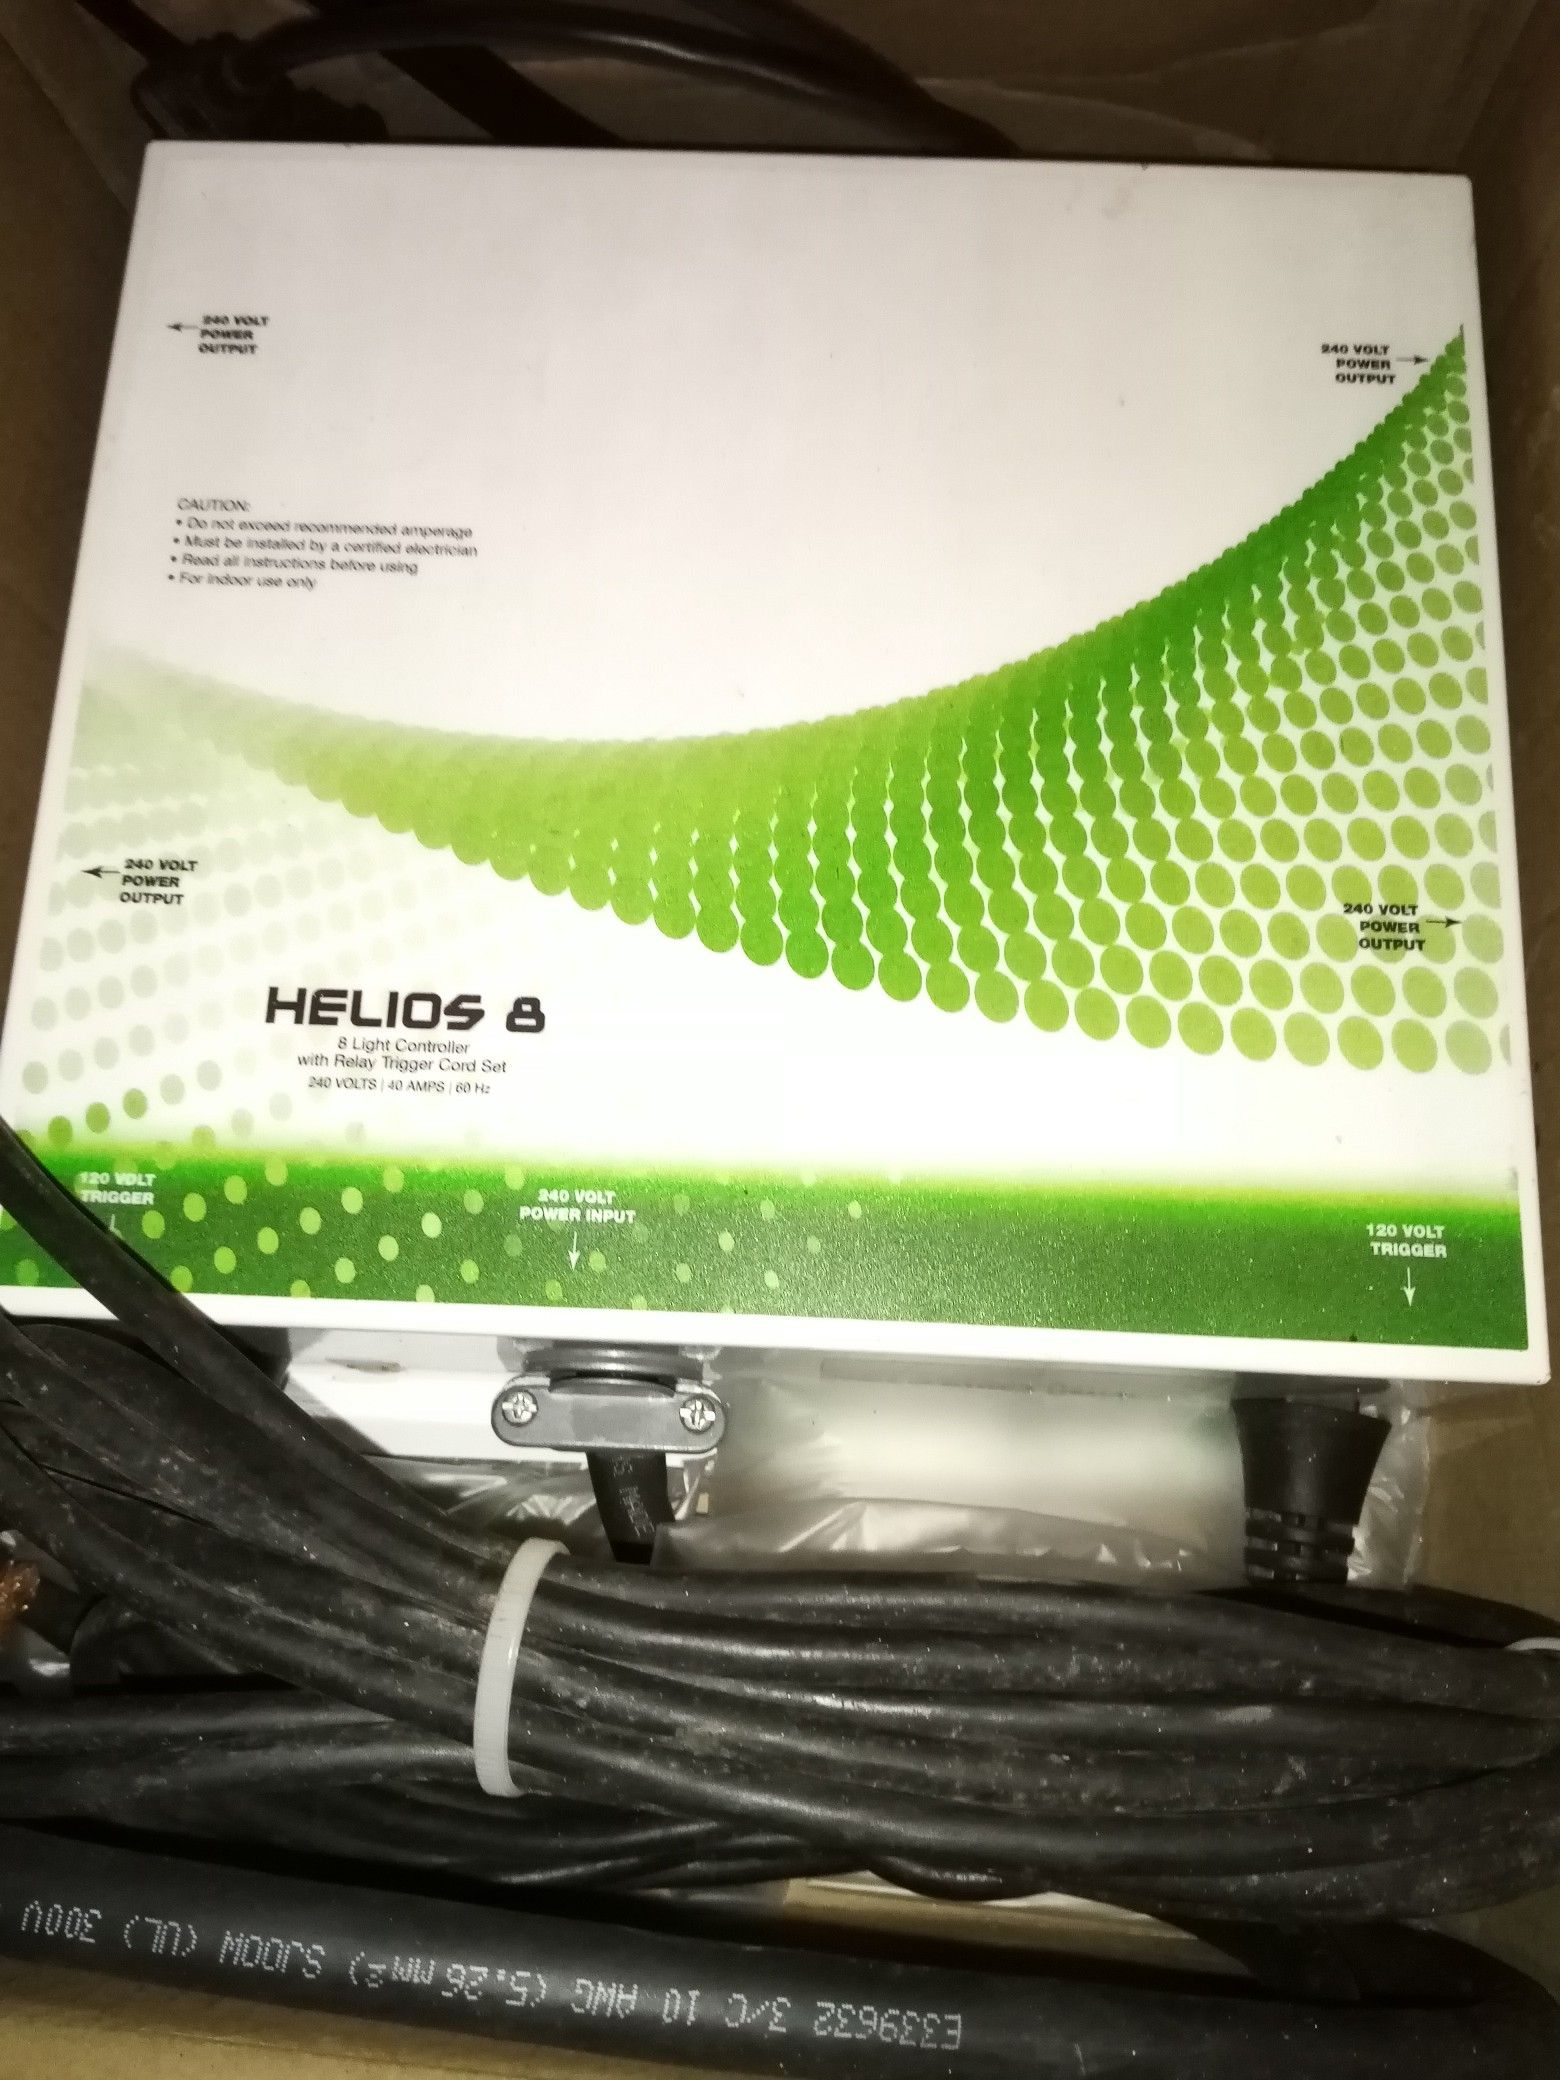 HELIOS 8-8 LIGHT CONTROLLER HORTICULTURE GROW